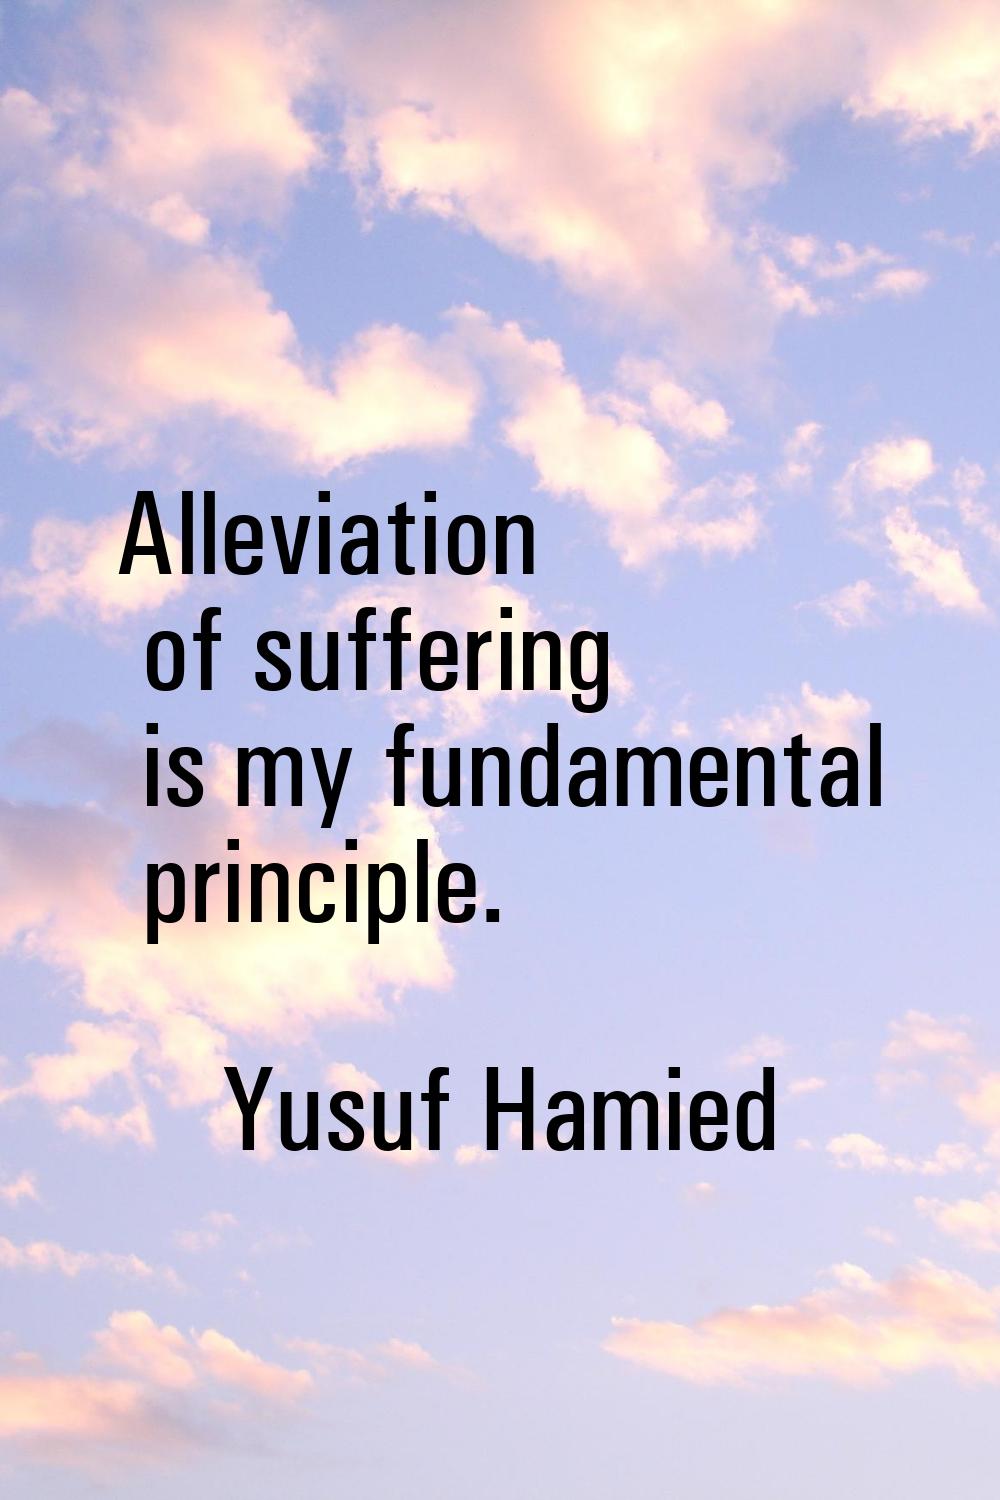 Alleviation of suffering is my fundamental principle.